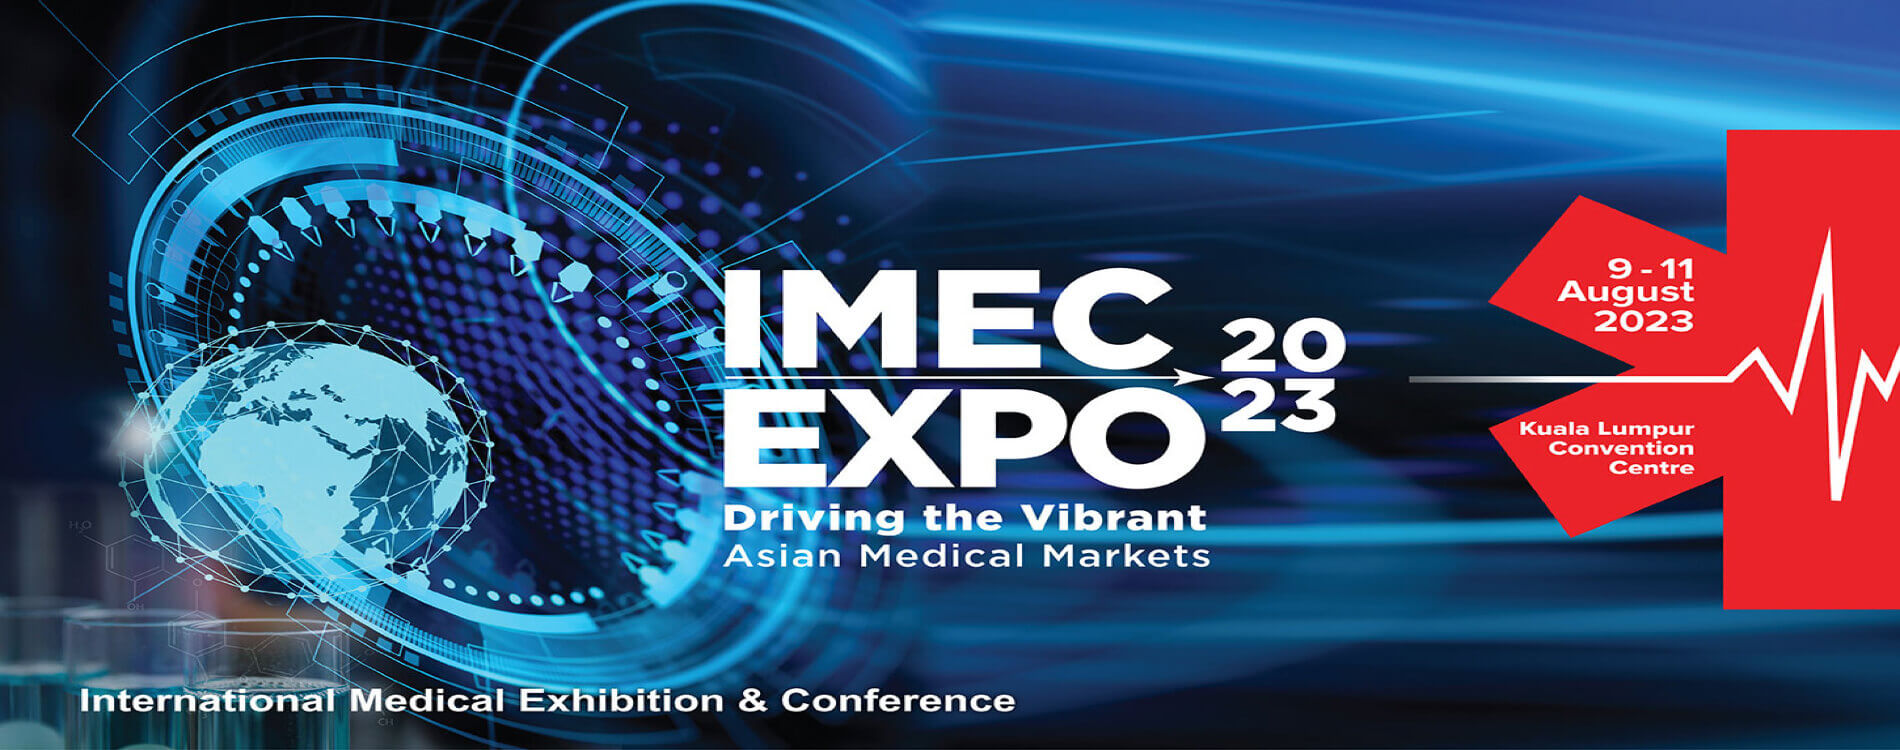 IMEC Expo 2023: International Medical Exhibition & Conference